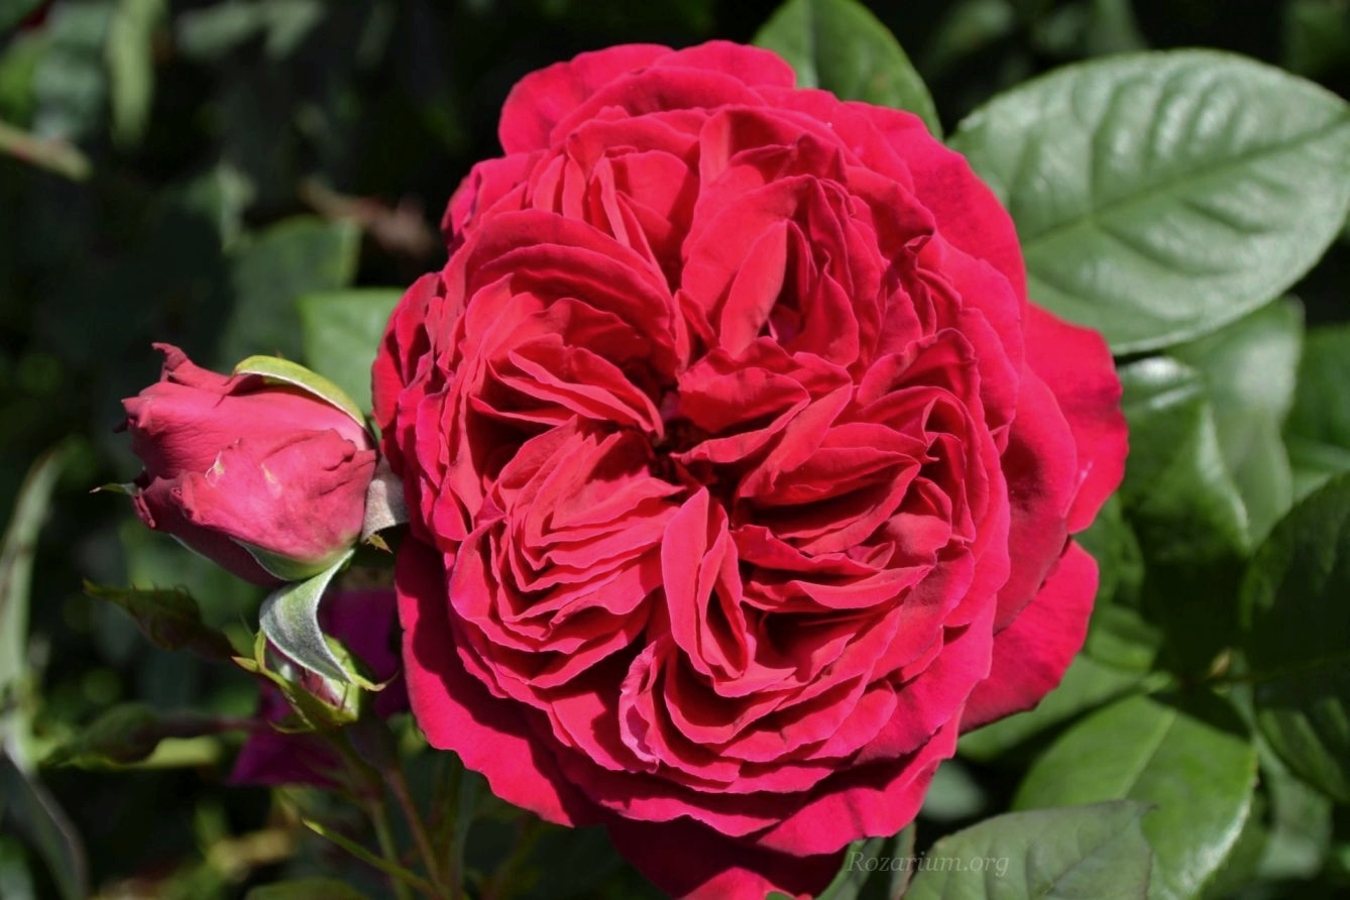 Роза чайно-гибридная Госпел 1 шт